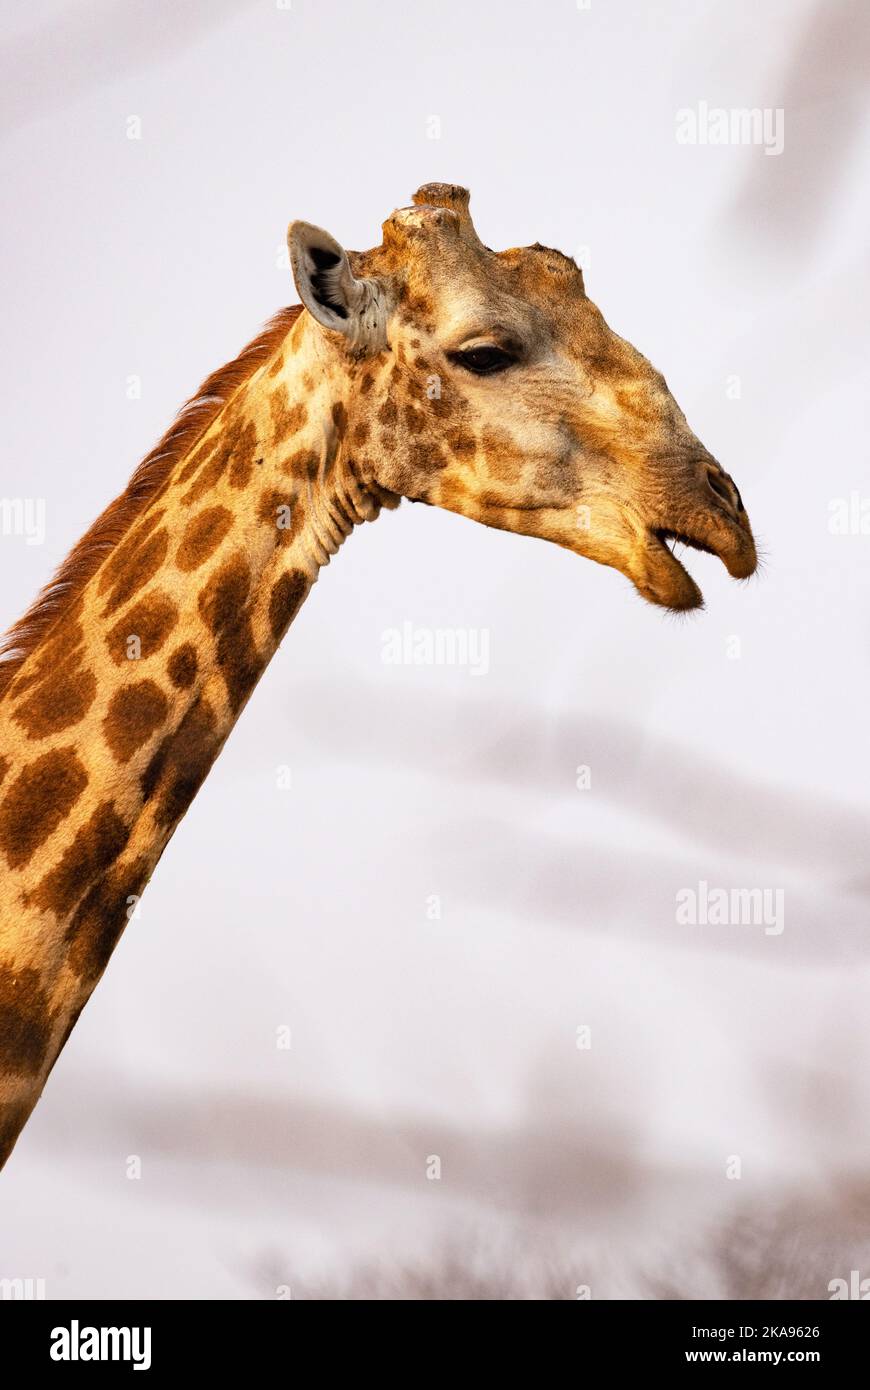 Southern Giraffe, Giraffa giraffa, head and neck pportrait, One adult animal, Moremi Game reserve, Okavango Delta, Botswana Africa. African wildlife. Stock Photo